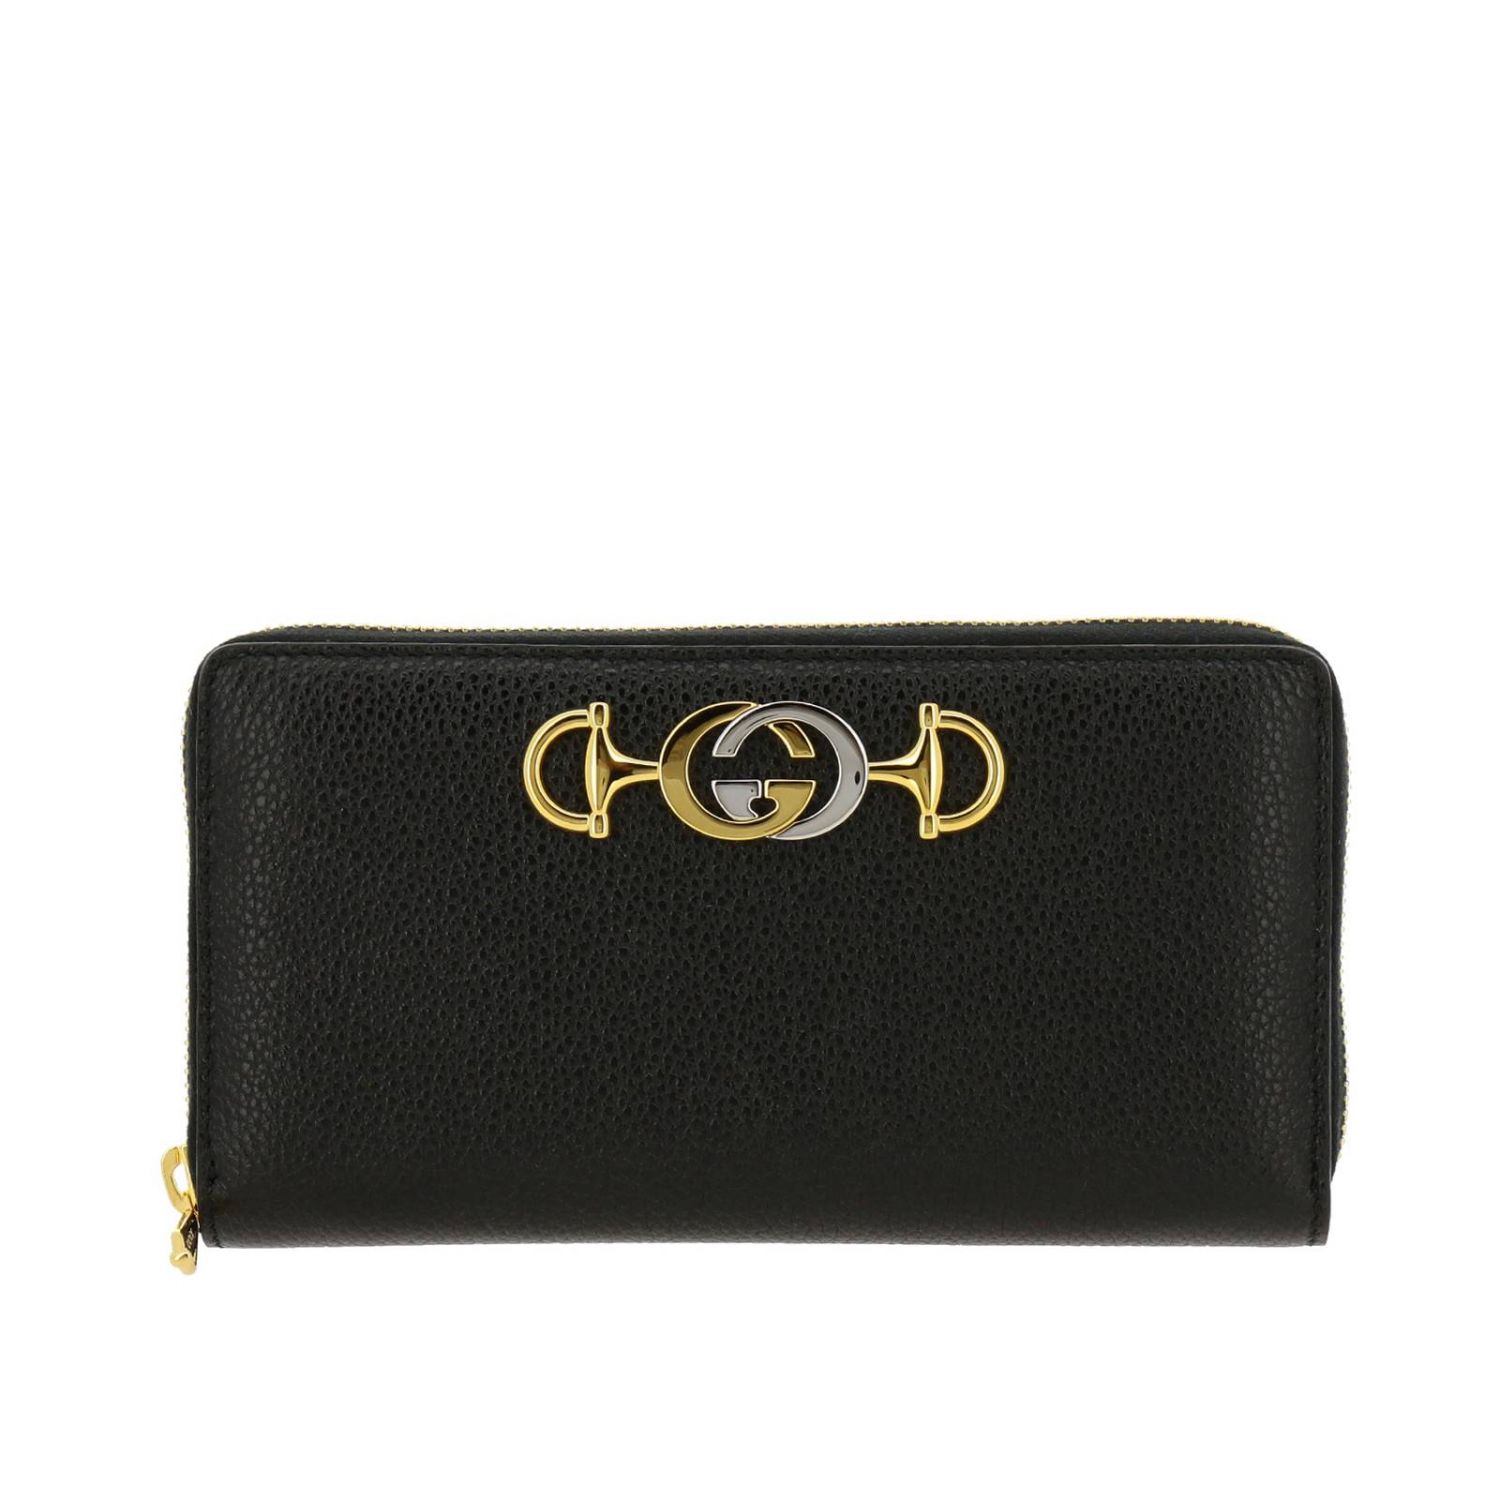 Gucci womens wallet sale